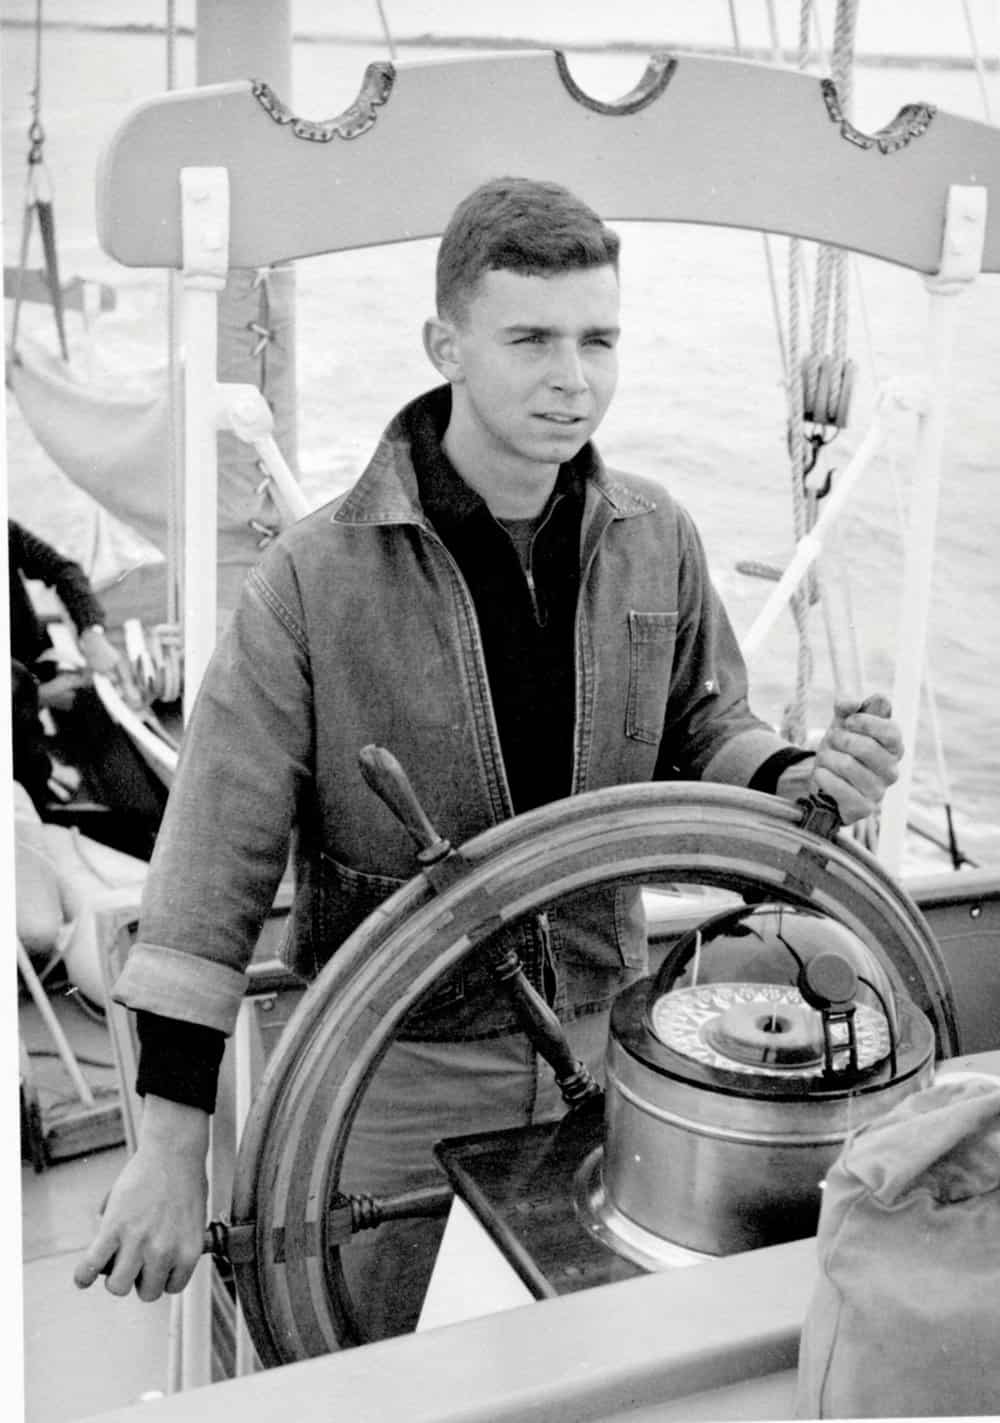  Hecklinger, age 18, at the helm of a 59-foot motorsailor. Photo by Joe Evans. 